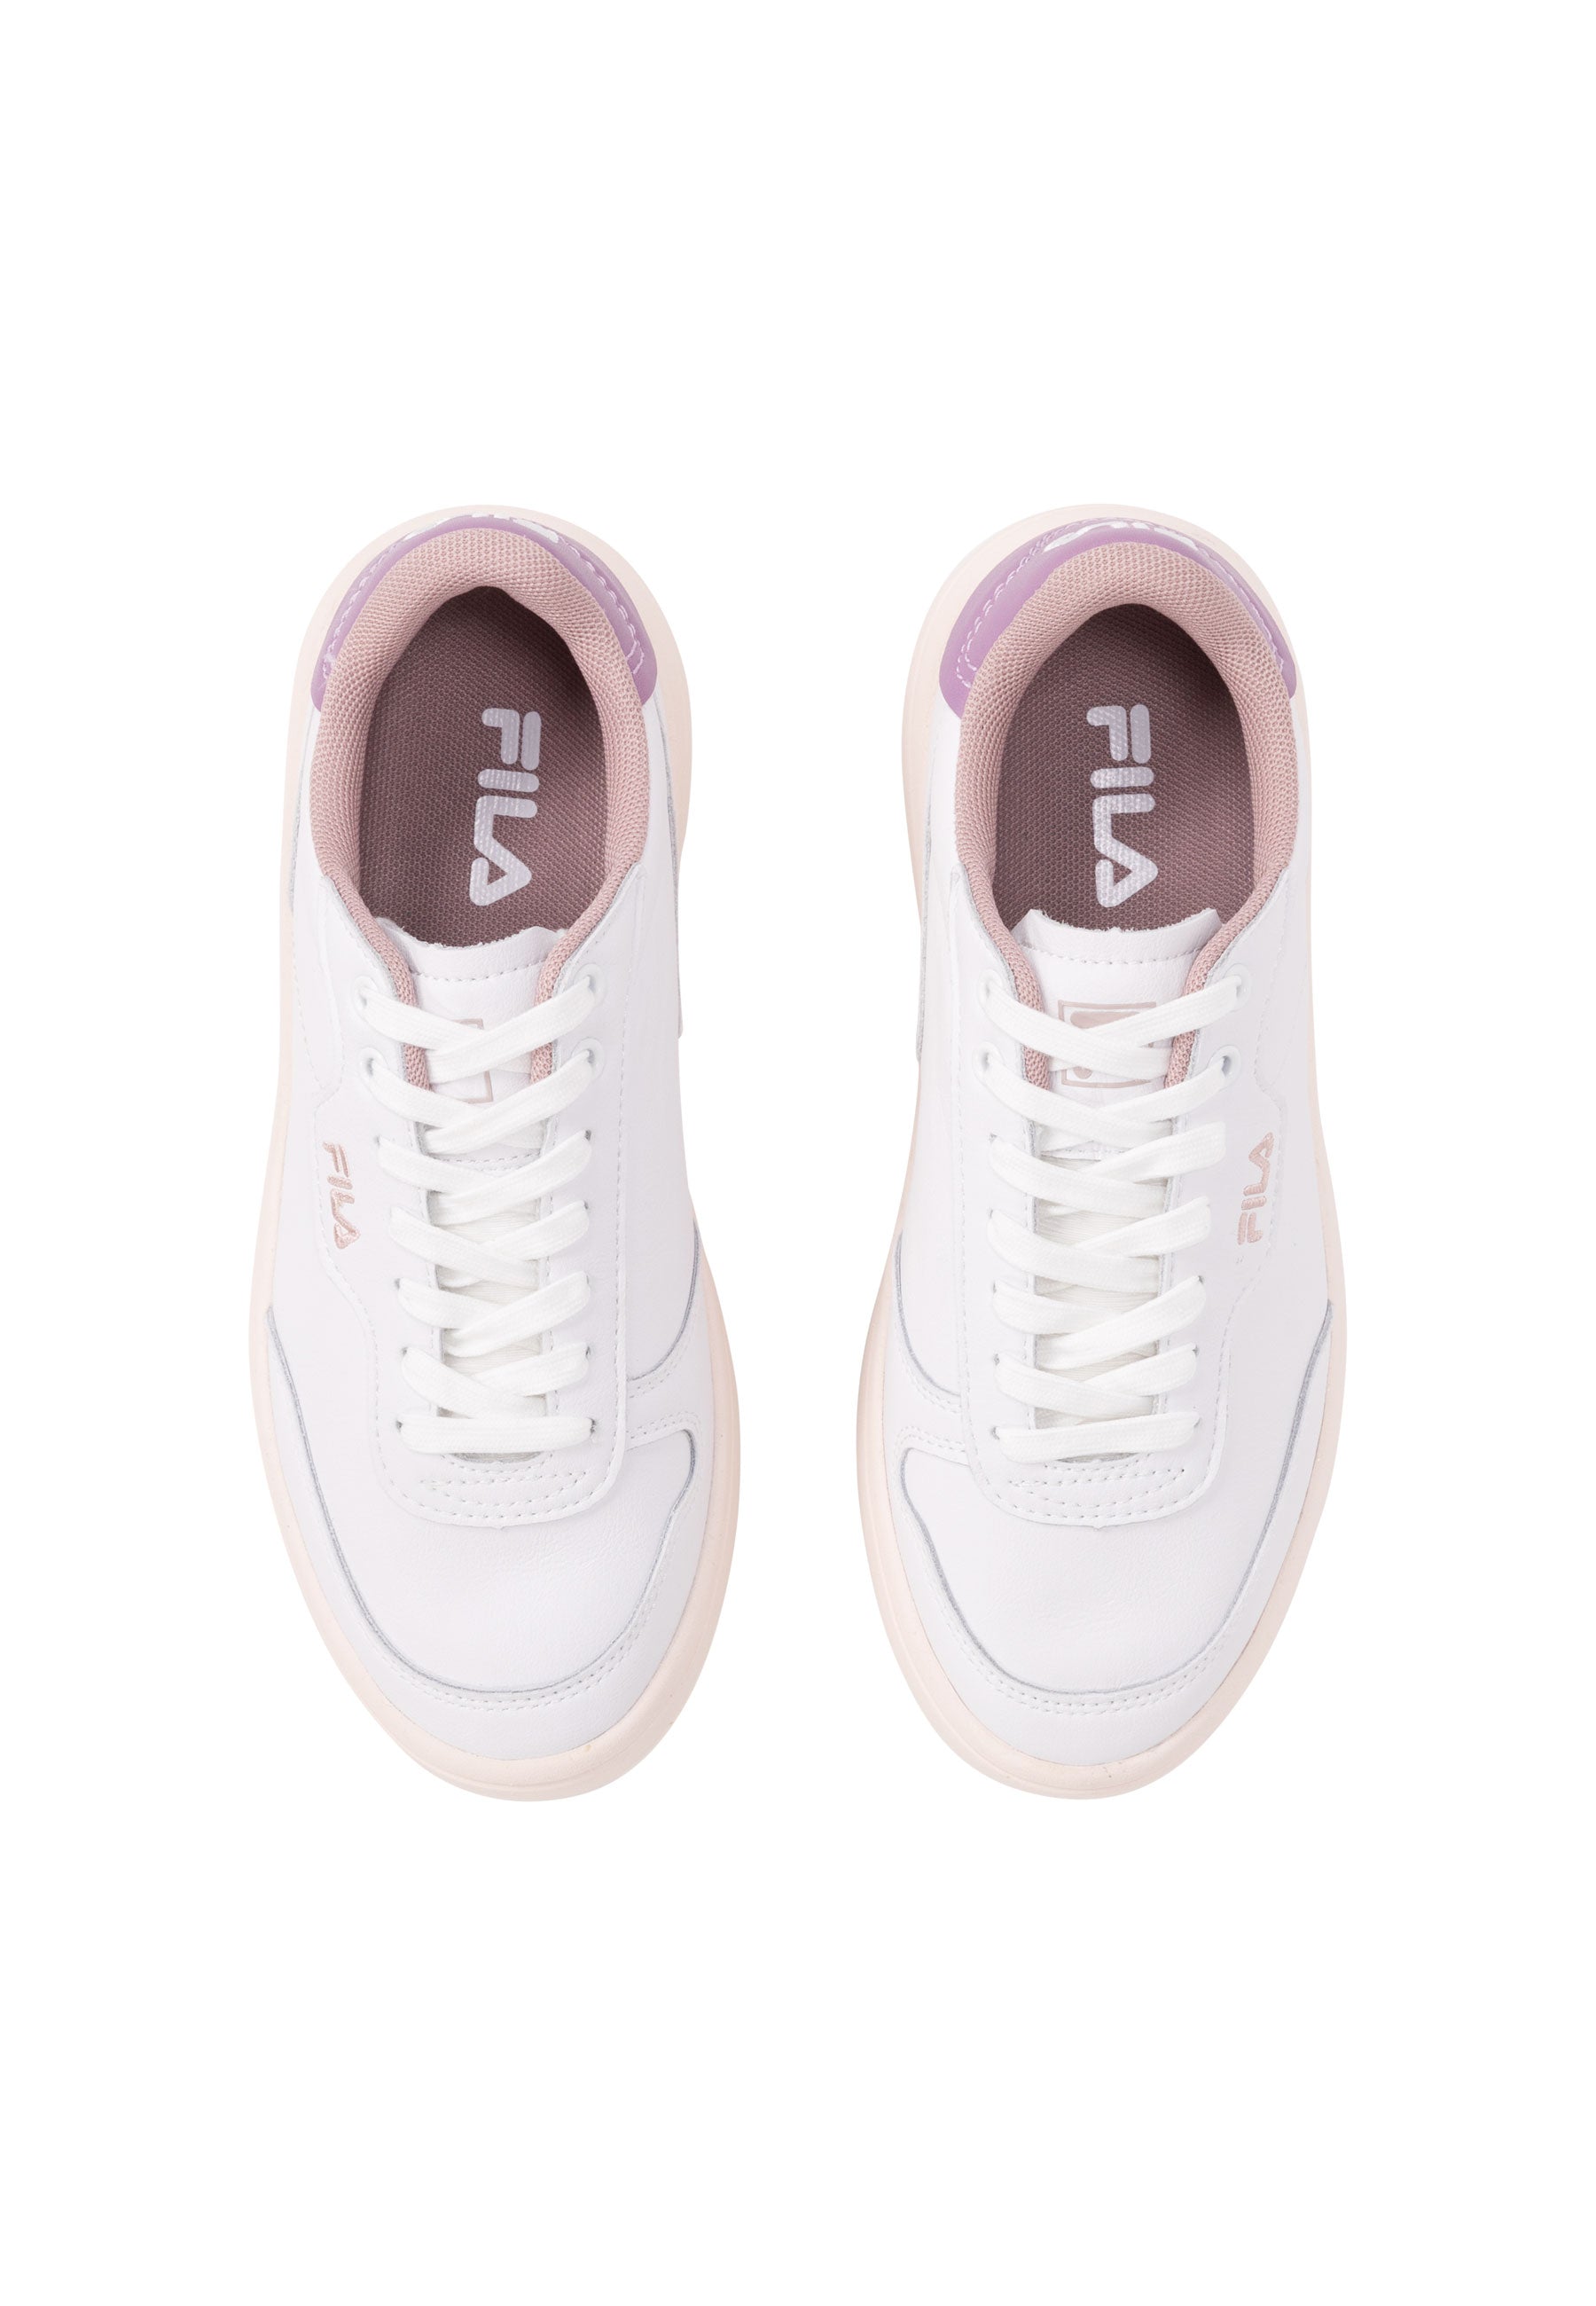 Premium L Wmn in White-Valerian Sneakers Fila   